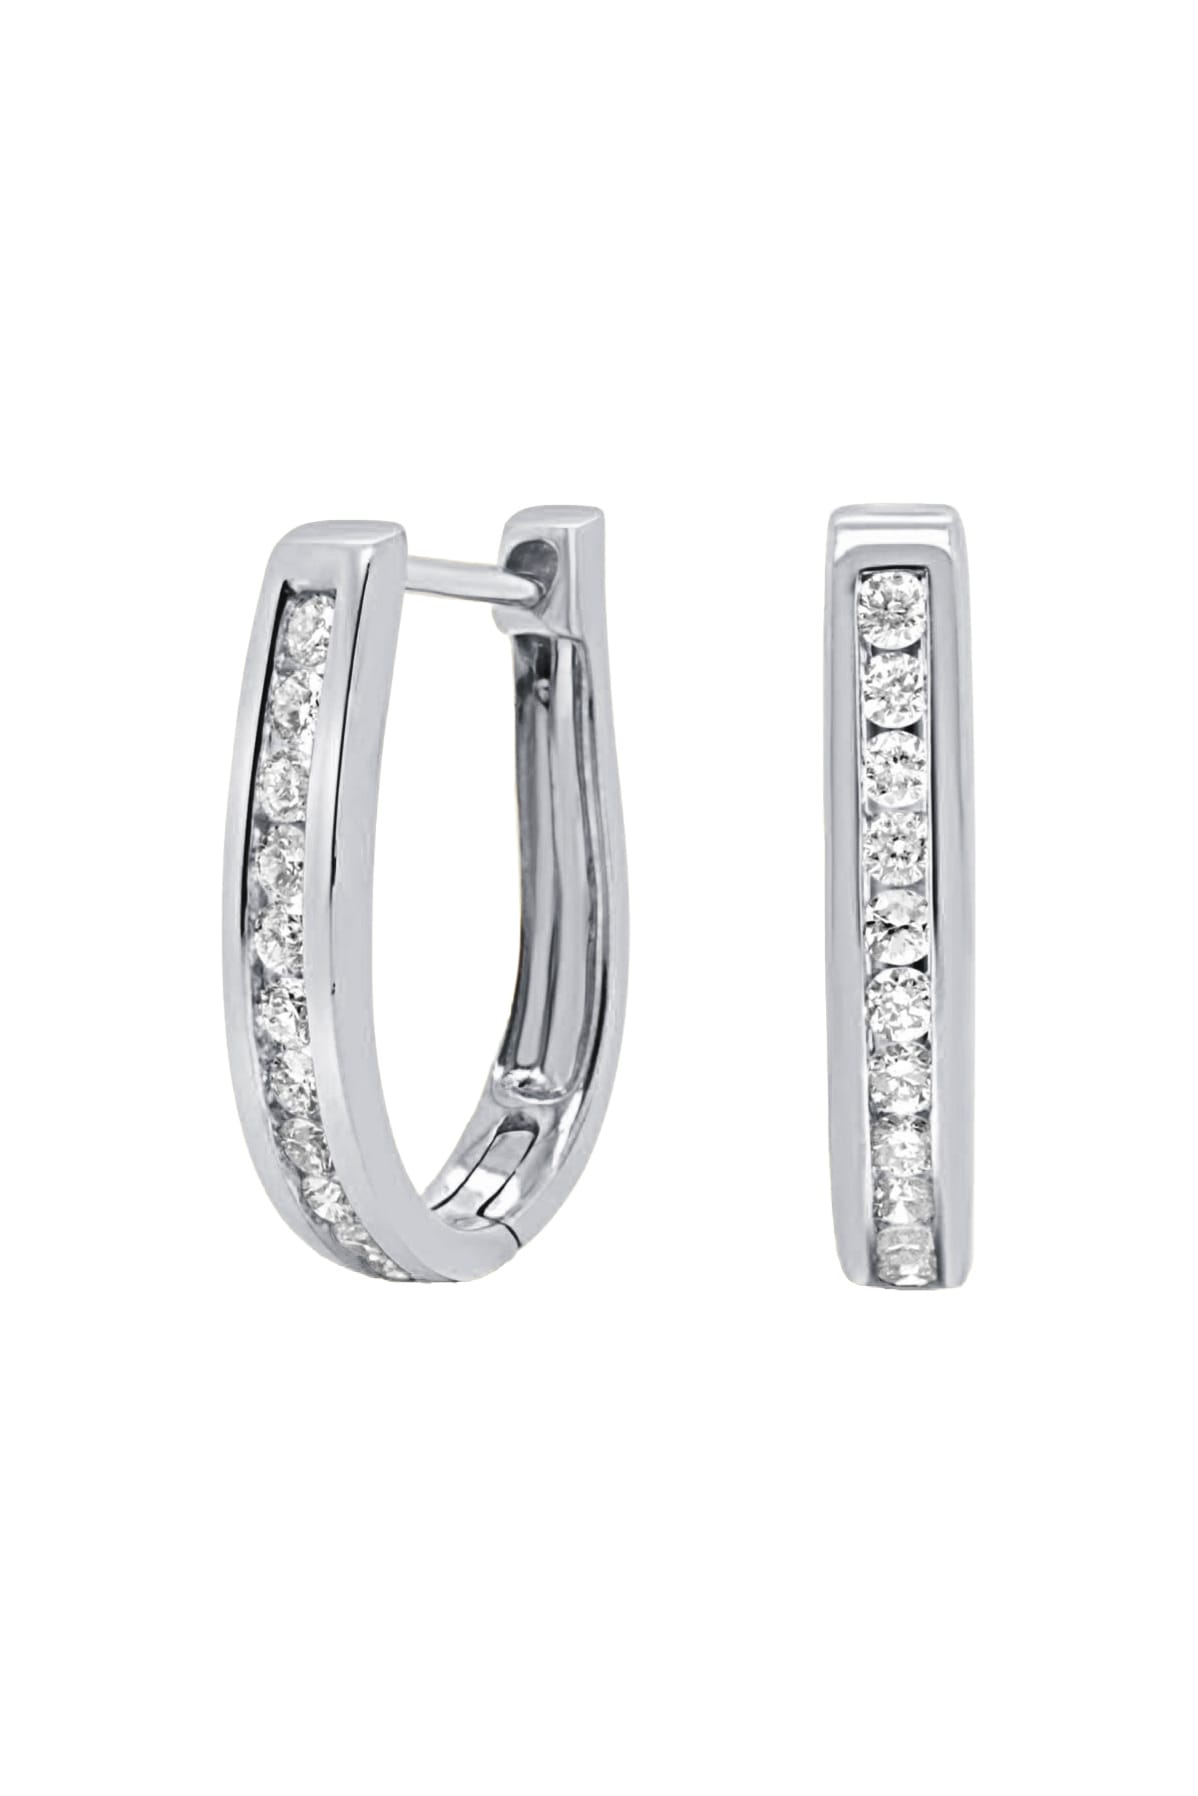 Stunning Diamond Huggie Earrings from LeGassick Diamonds and Jewellery Gold Coast, Australia